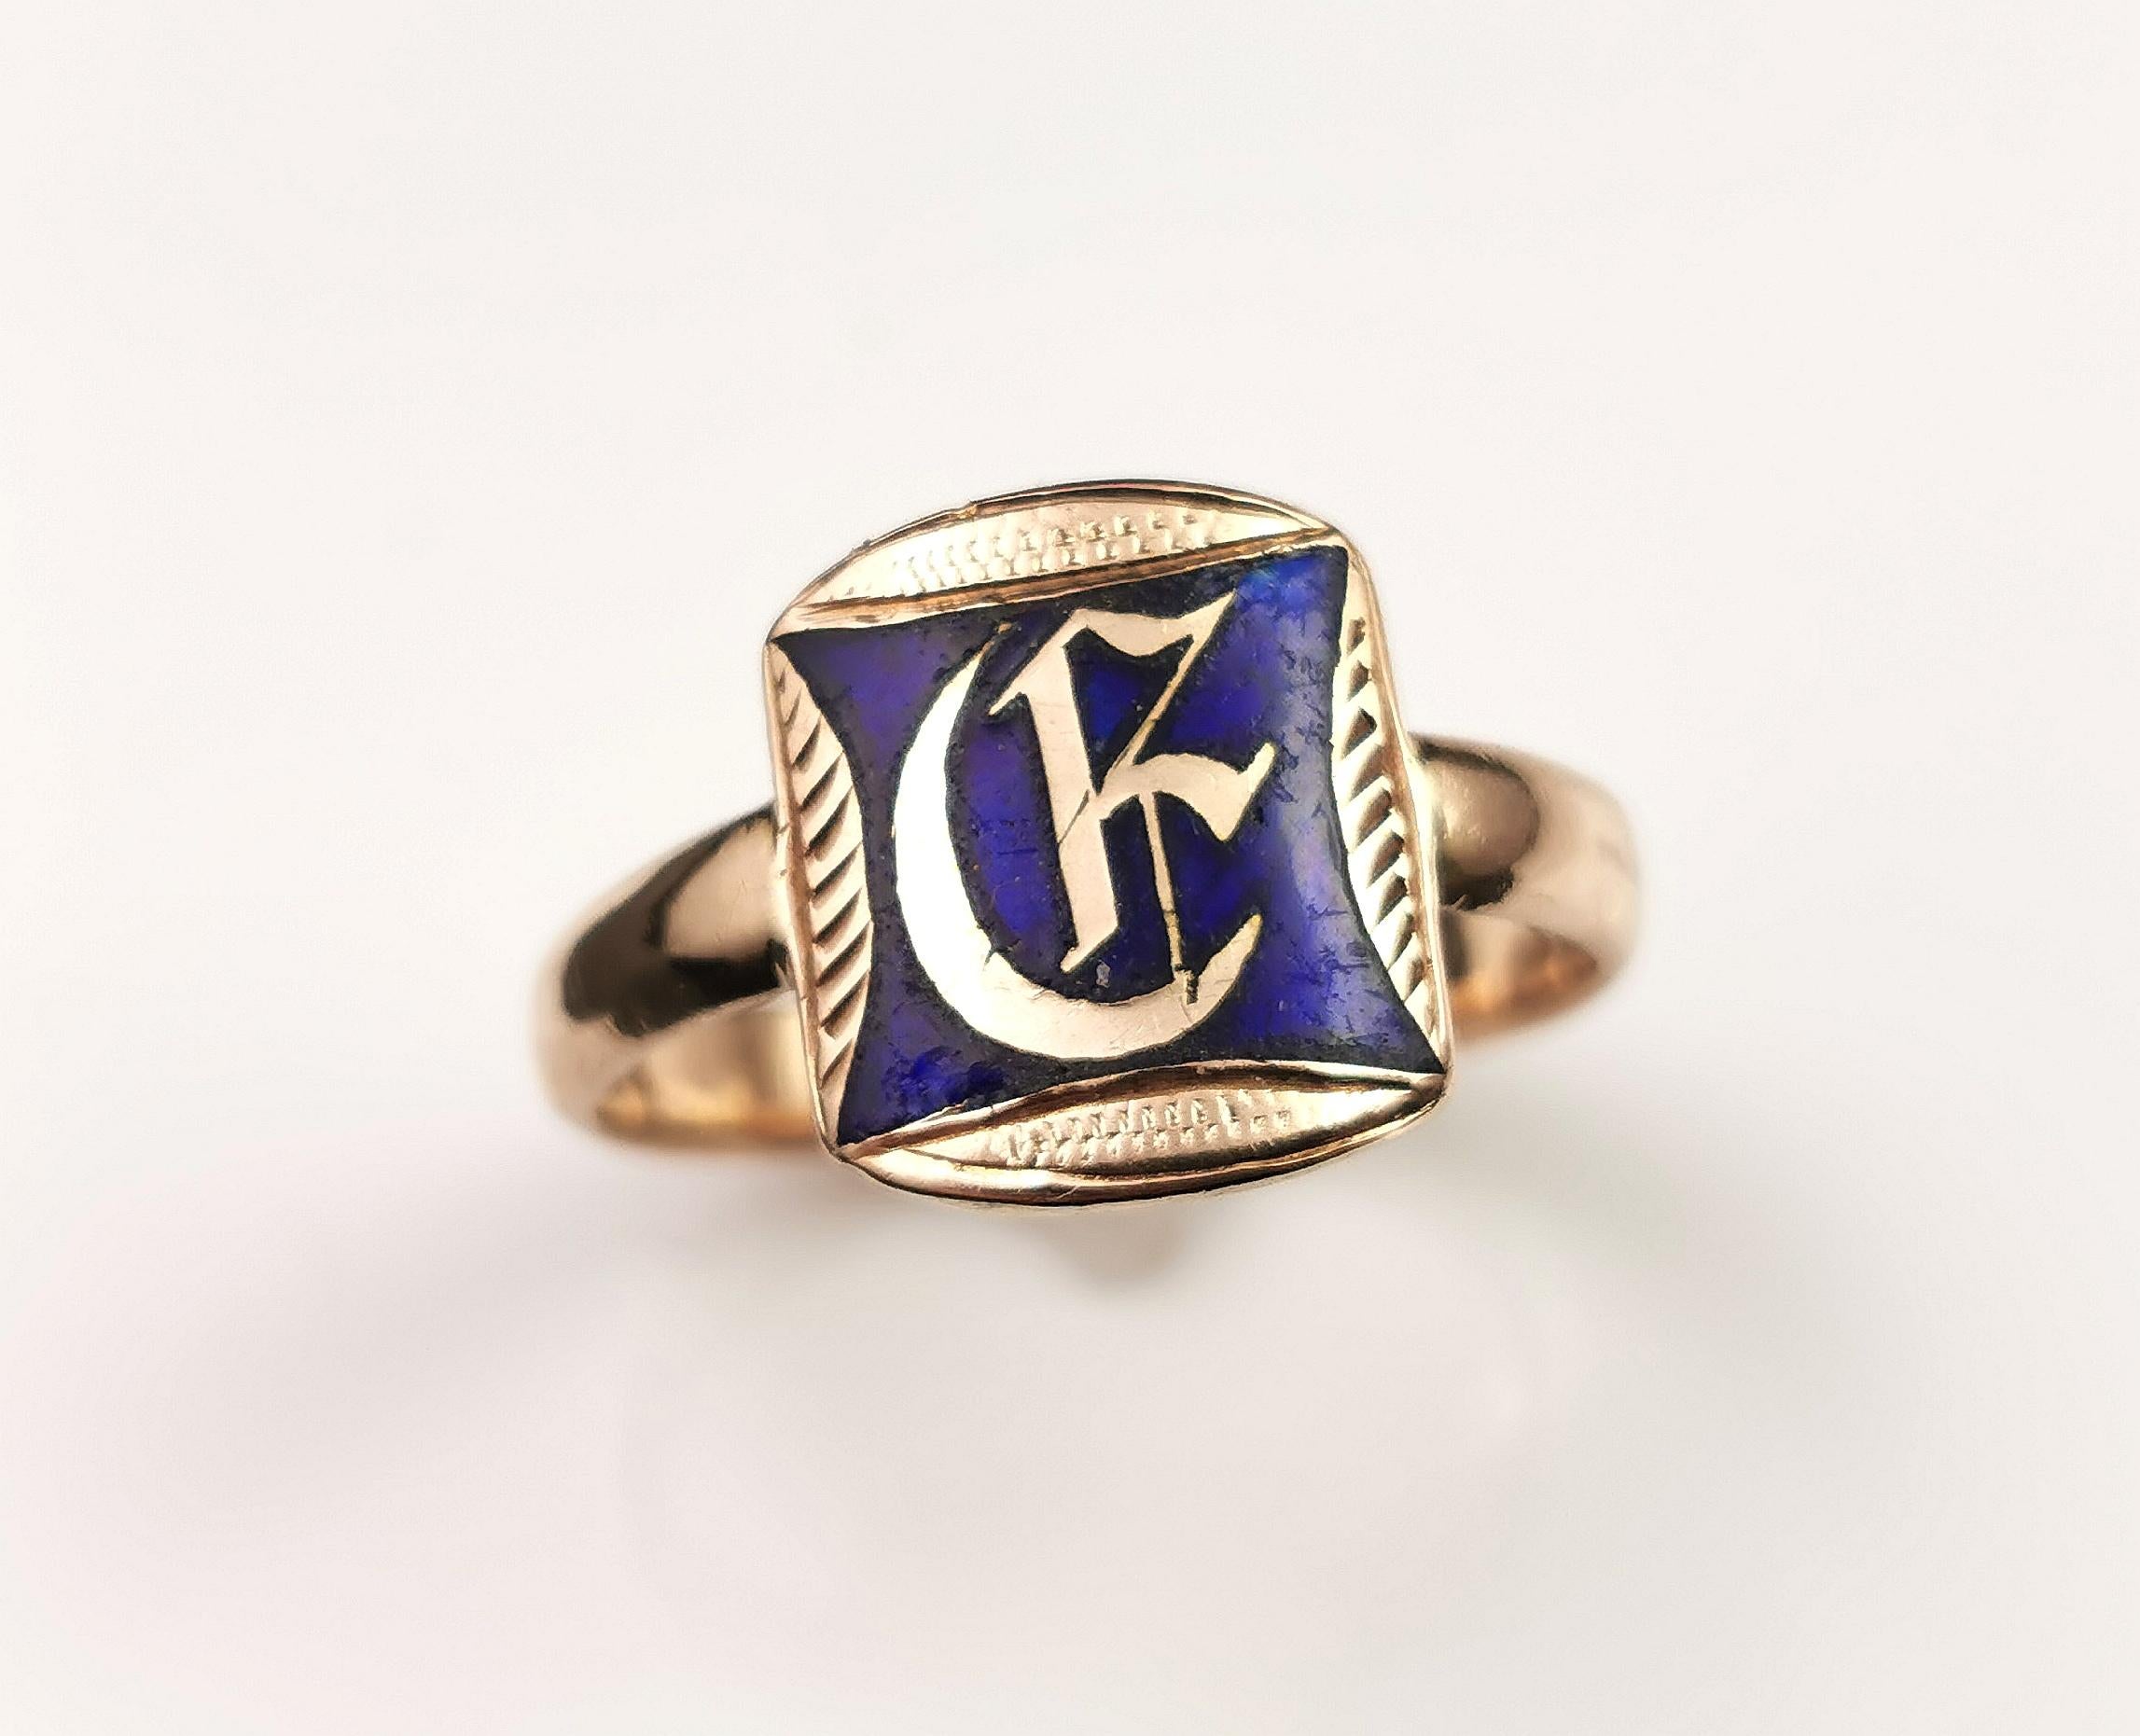 Antique 15k Rose Gold Monogram Signet Ring, Blue Enamel 4